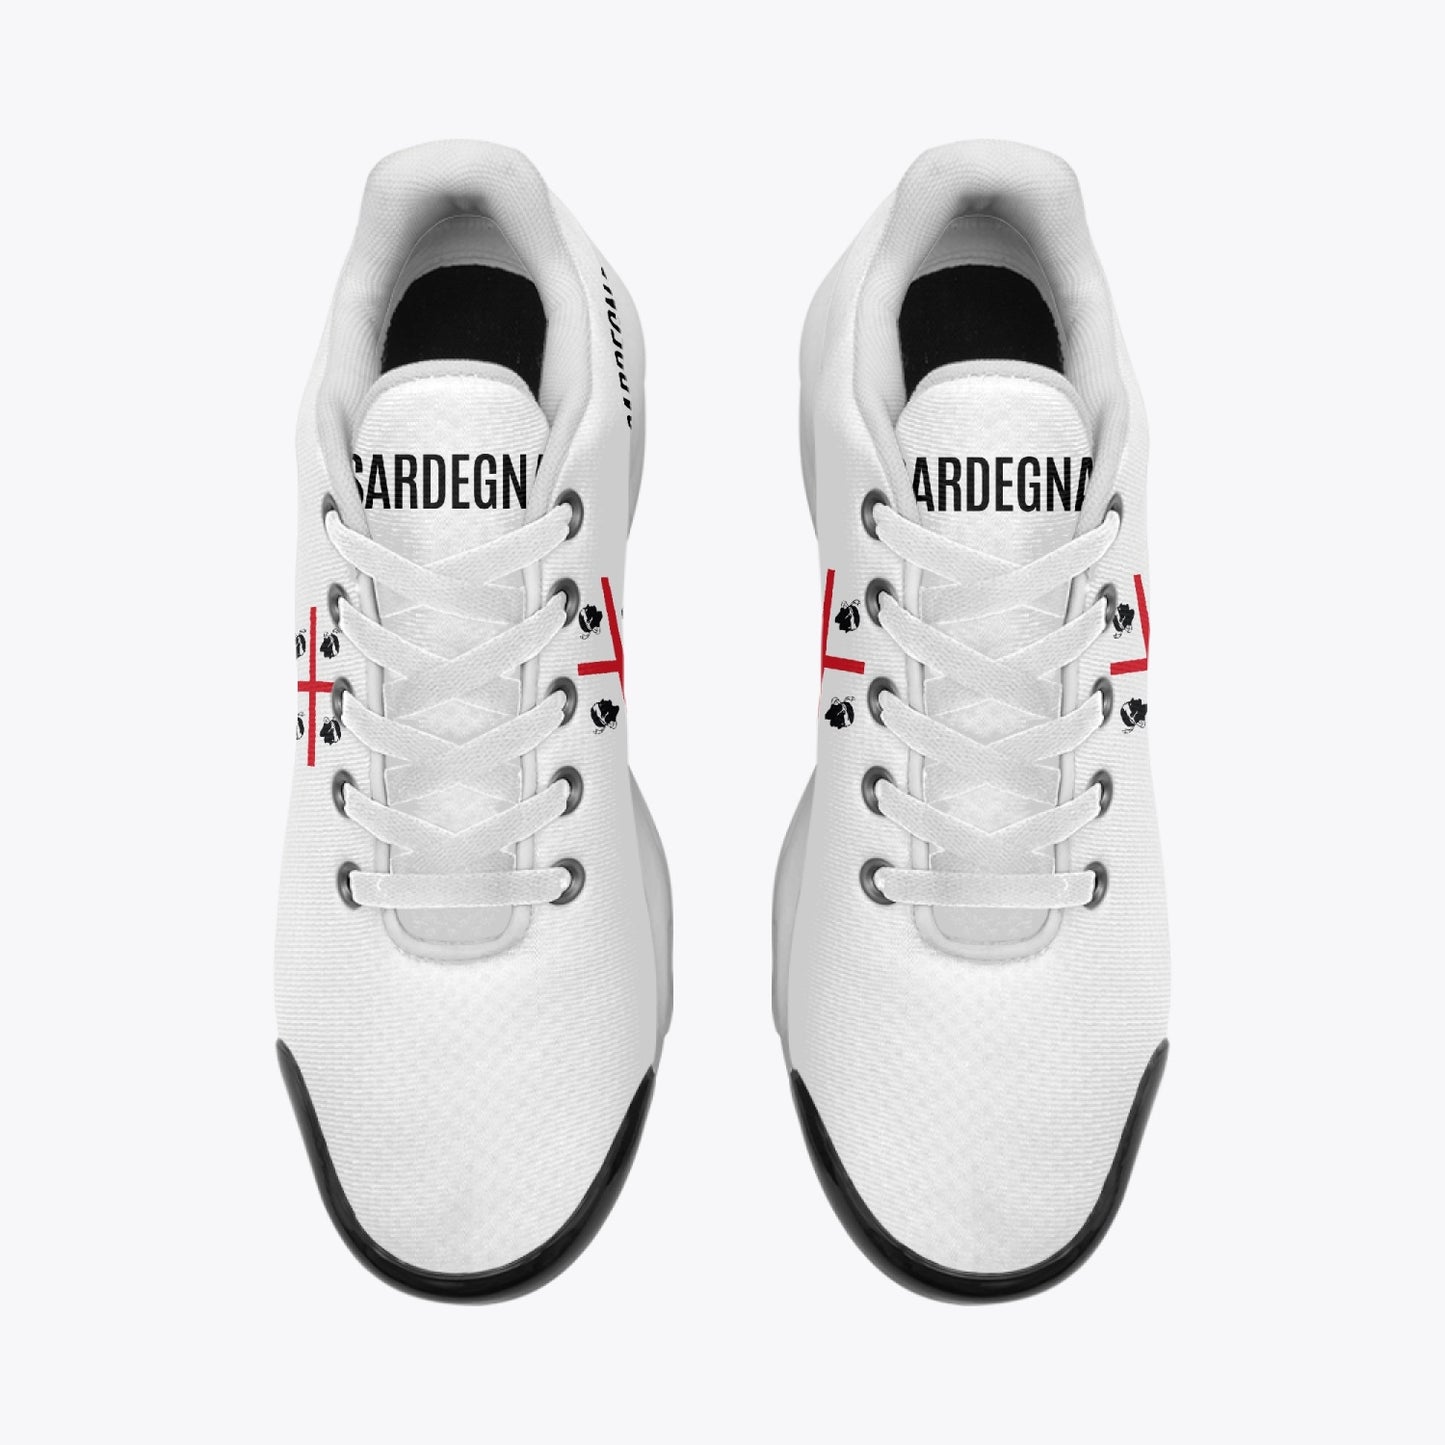 Sardegna Bounce Sneakers